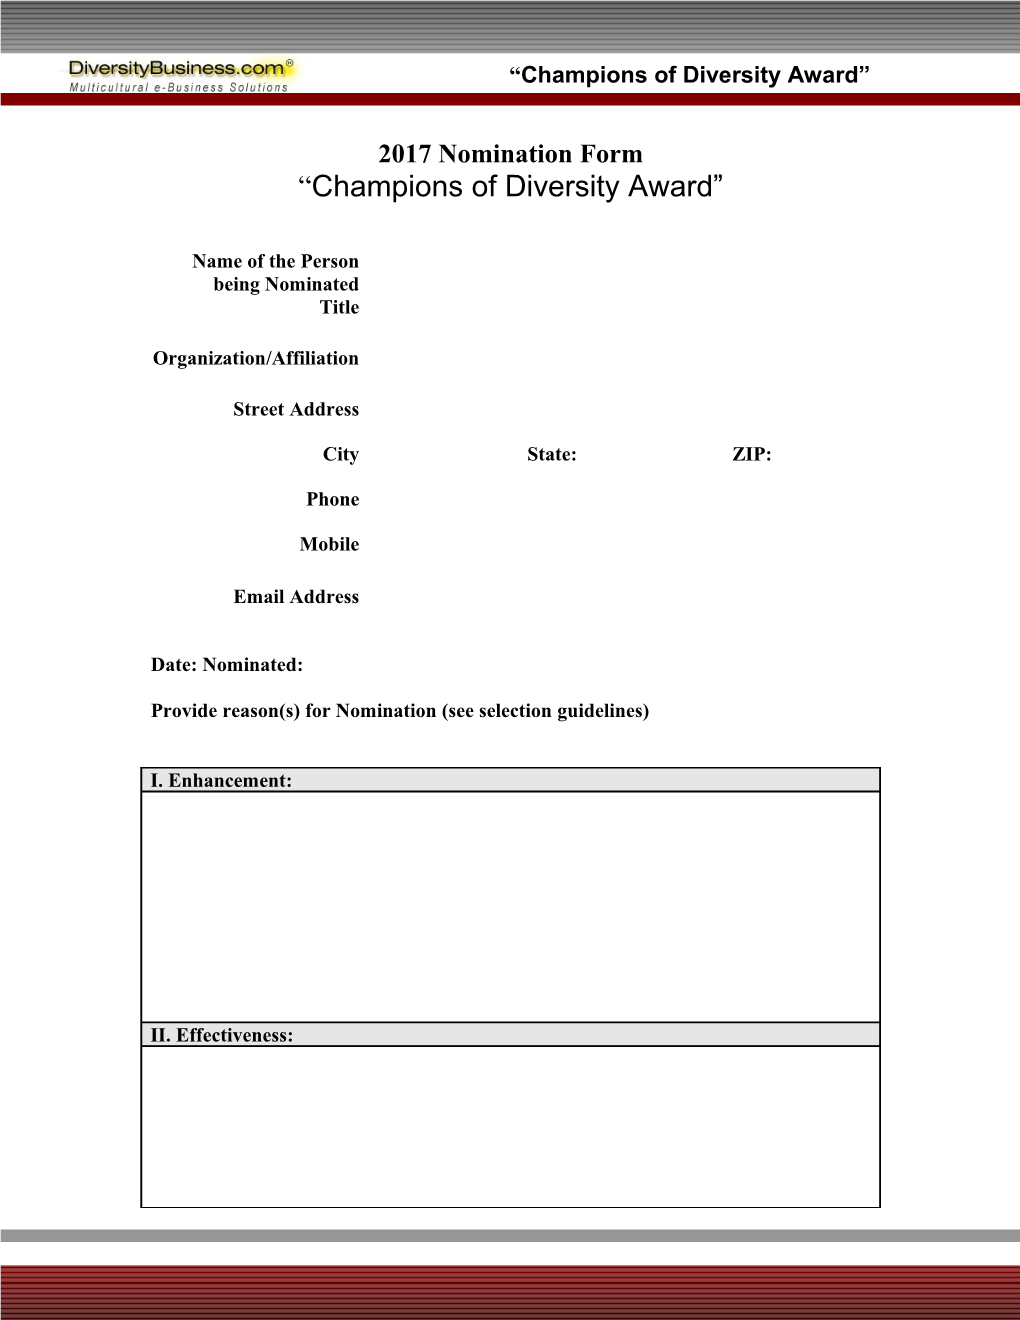 Champions of Diversity Award